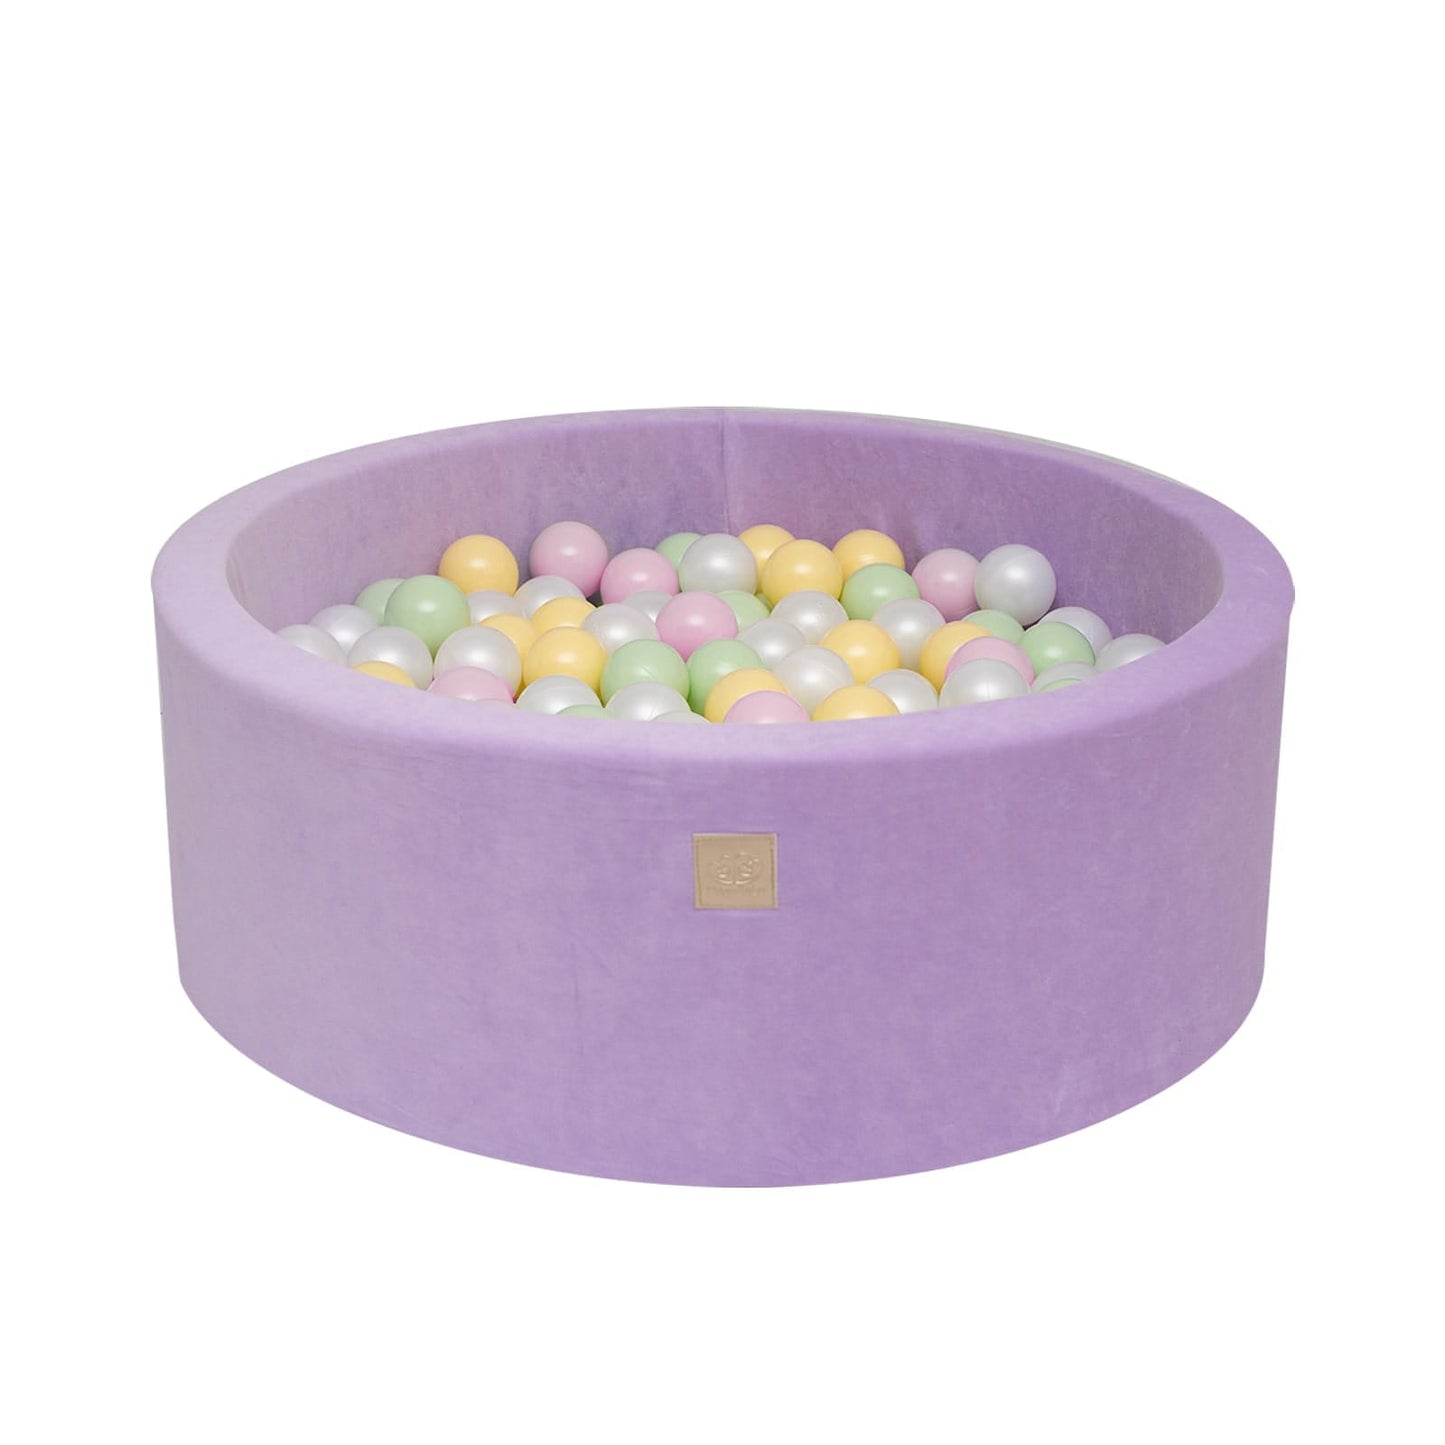 Luxury Velvet Round Ball Pit - Hocus Crocus For Kids By MeowBaby - Stylemykid.com